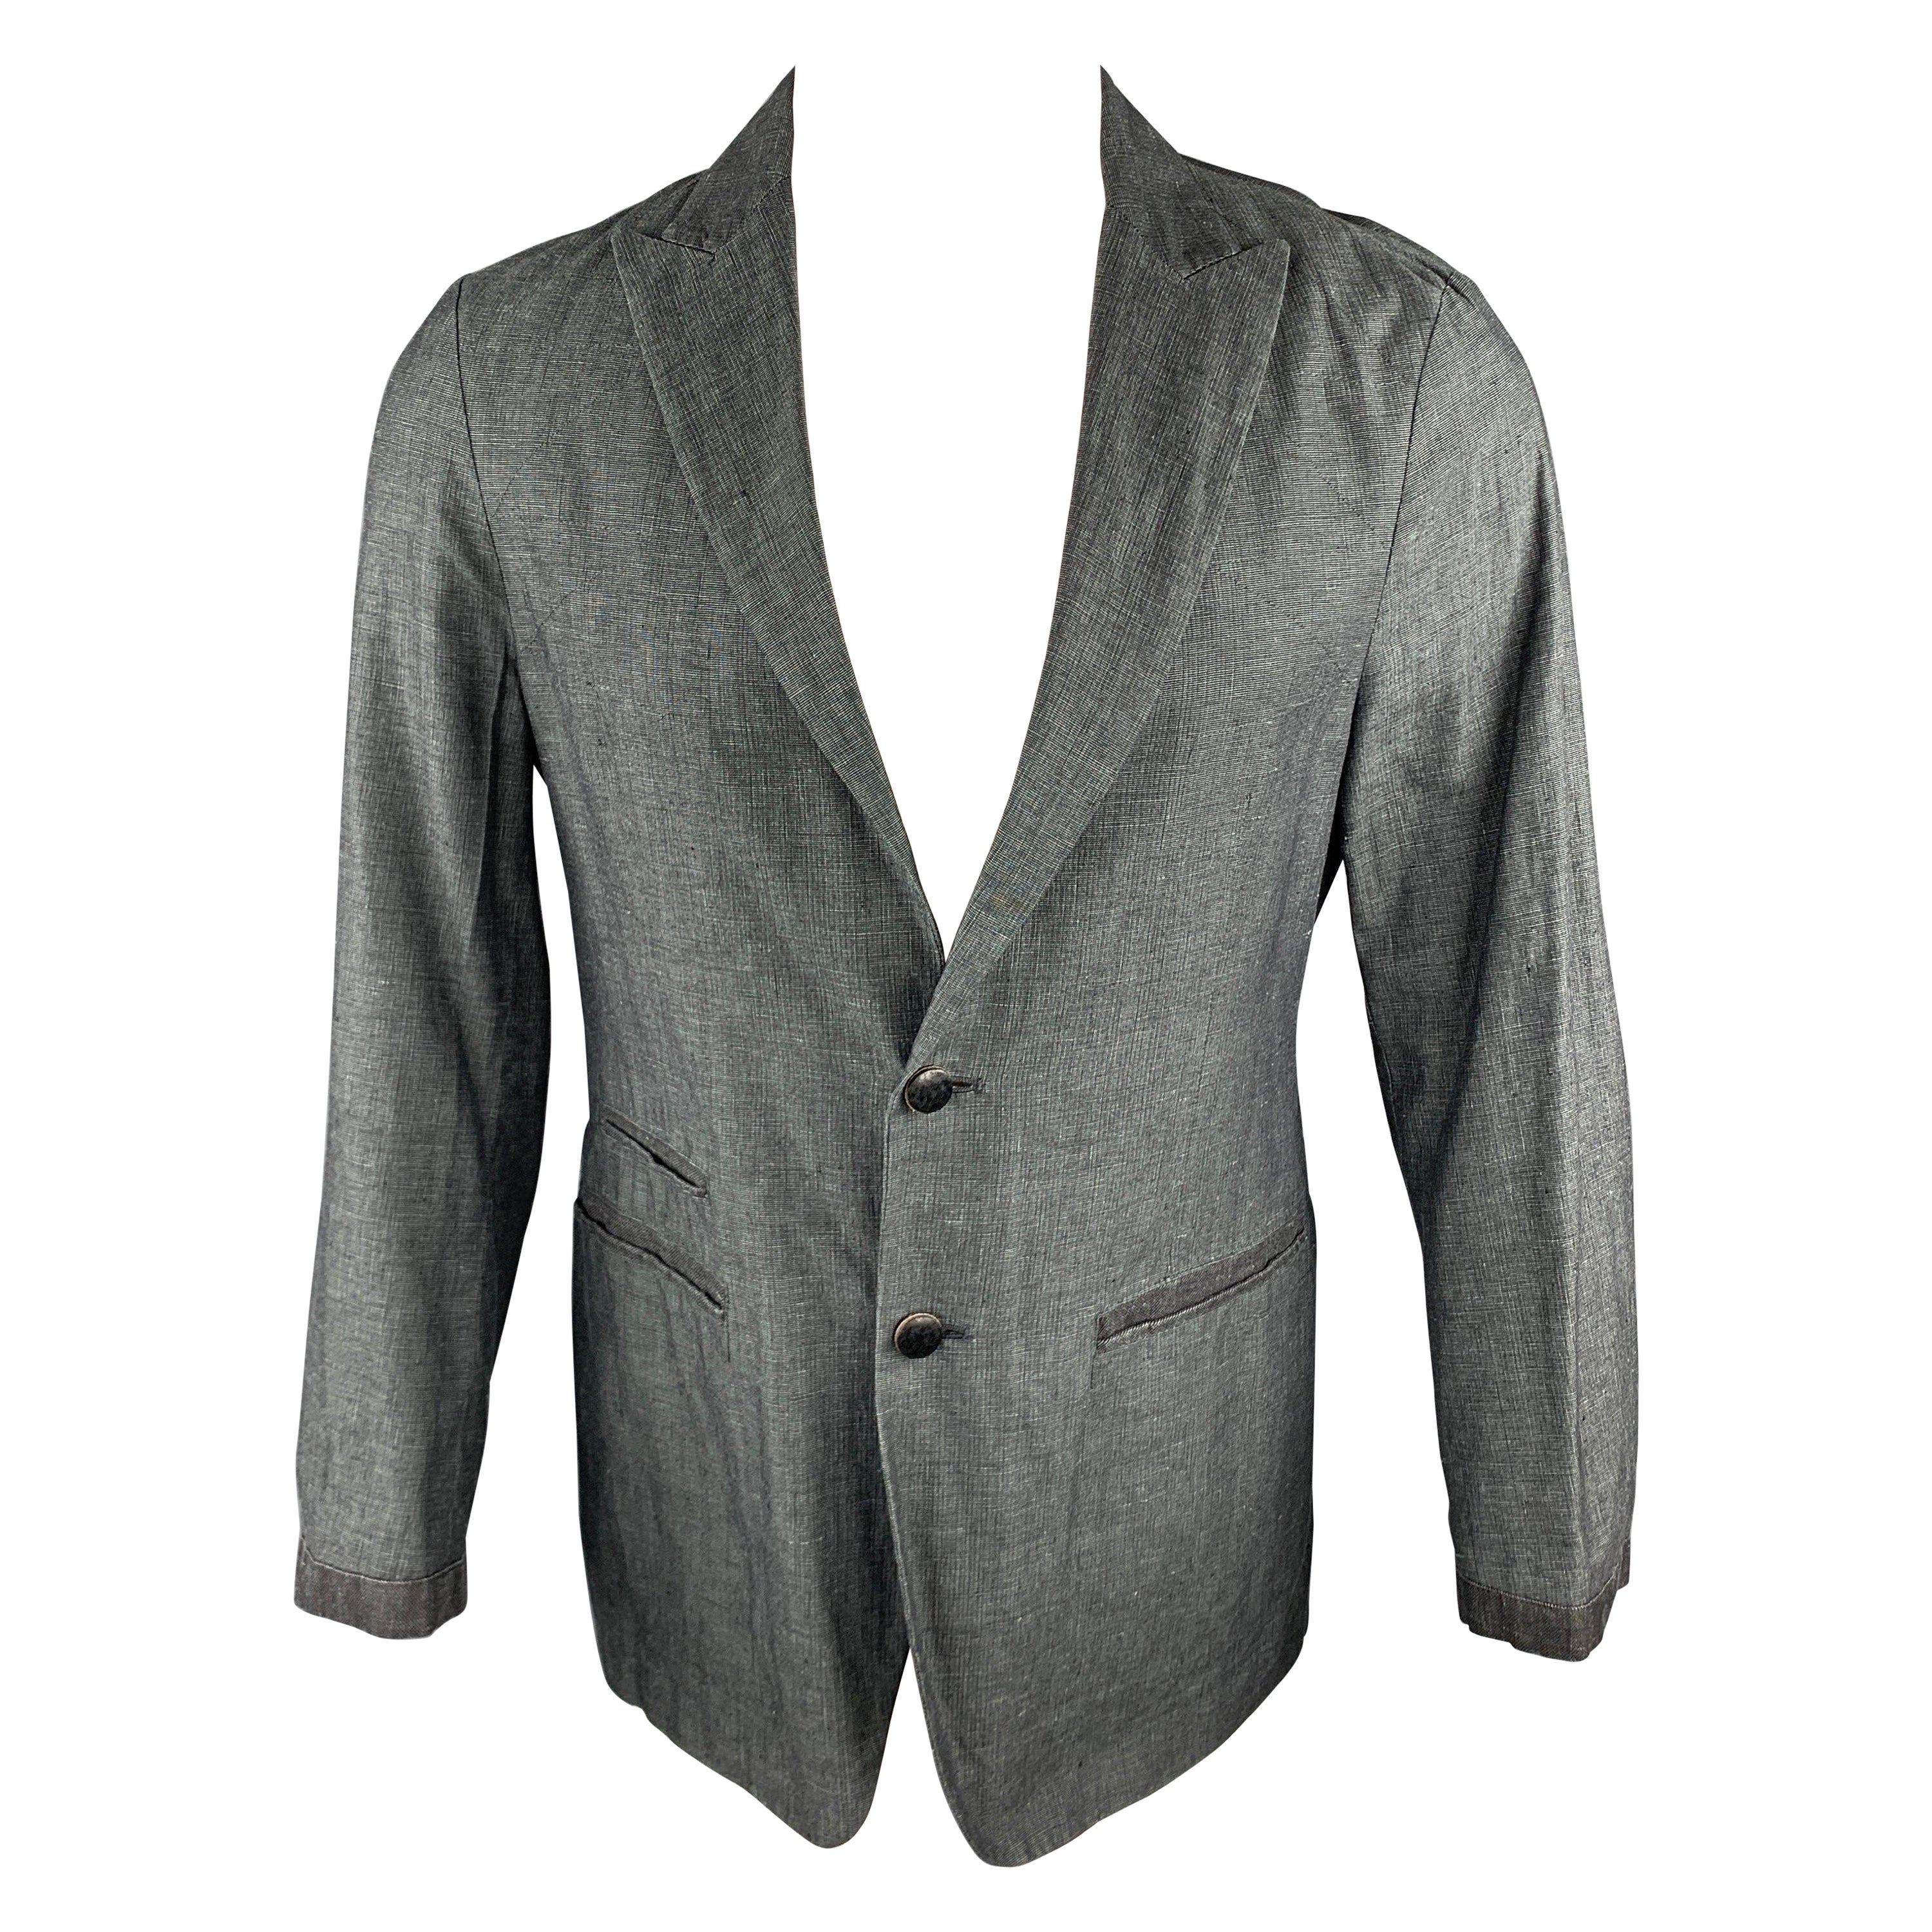 JOHN VARVATOS Size 36 Dark Gray Heather Linen / Cotton Sport Coat For Sale